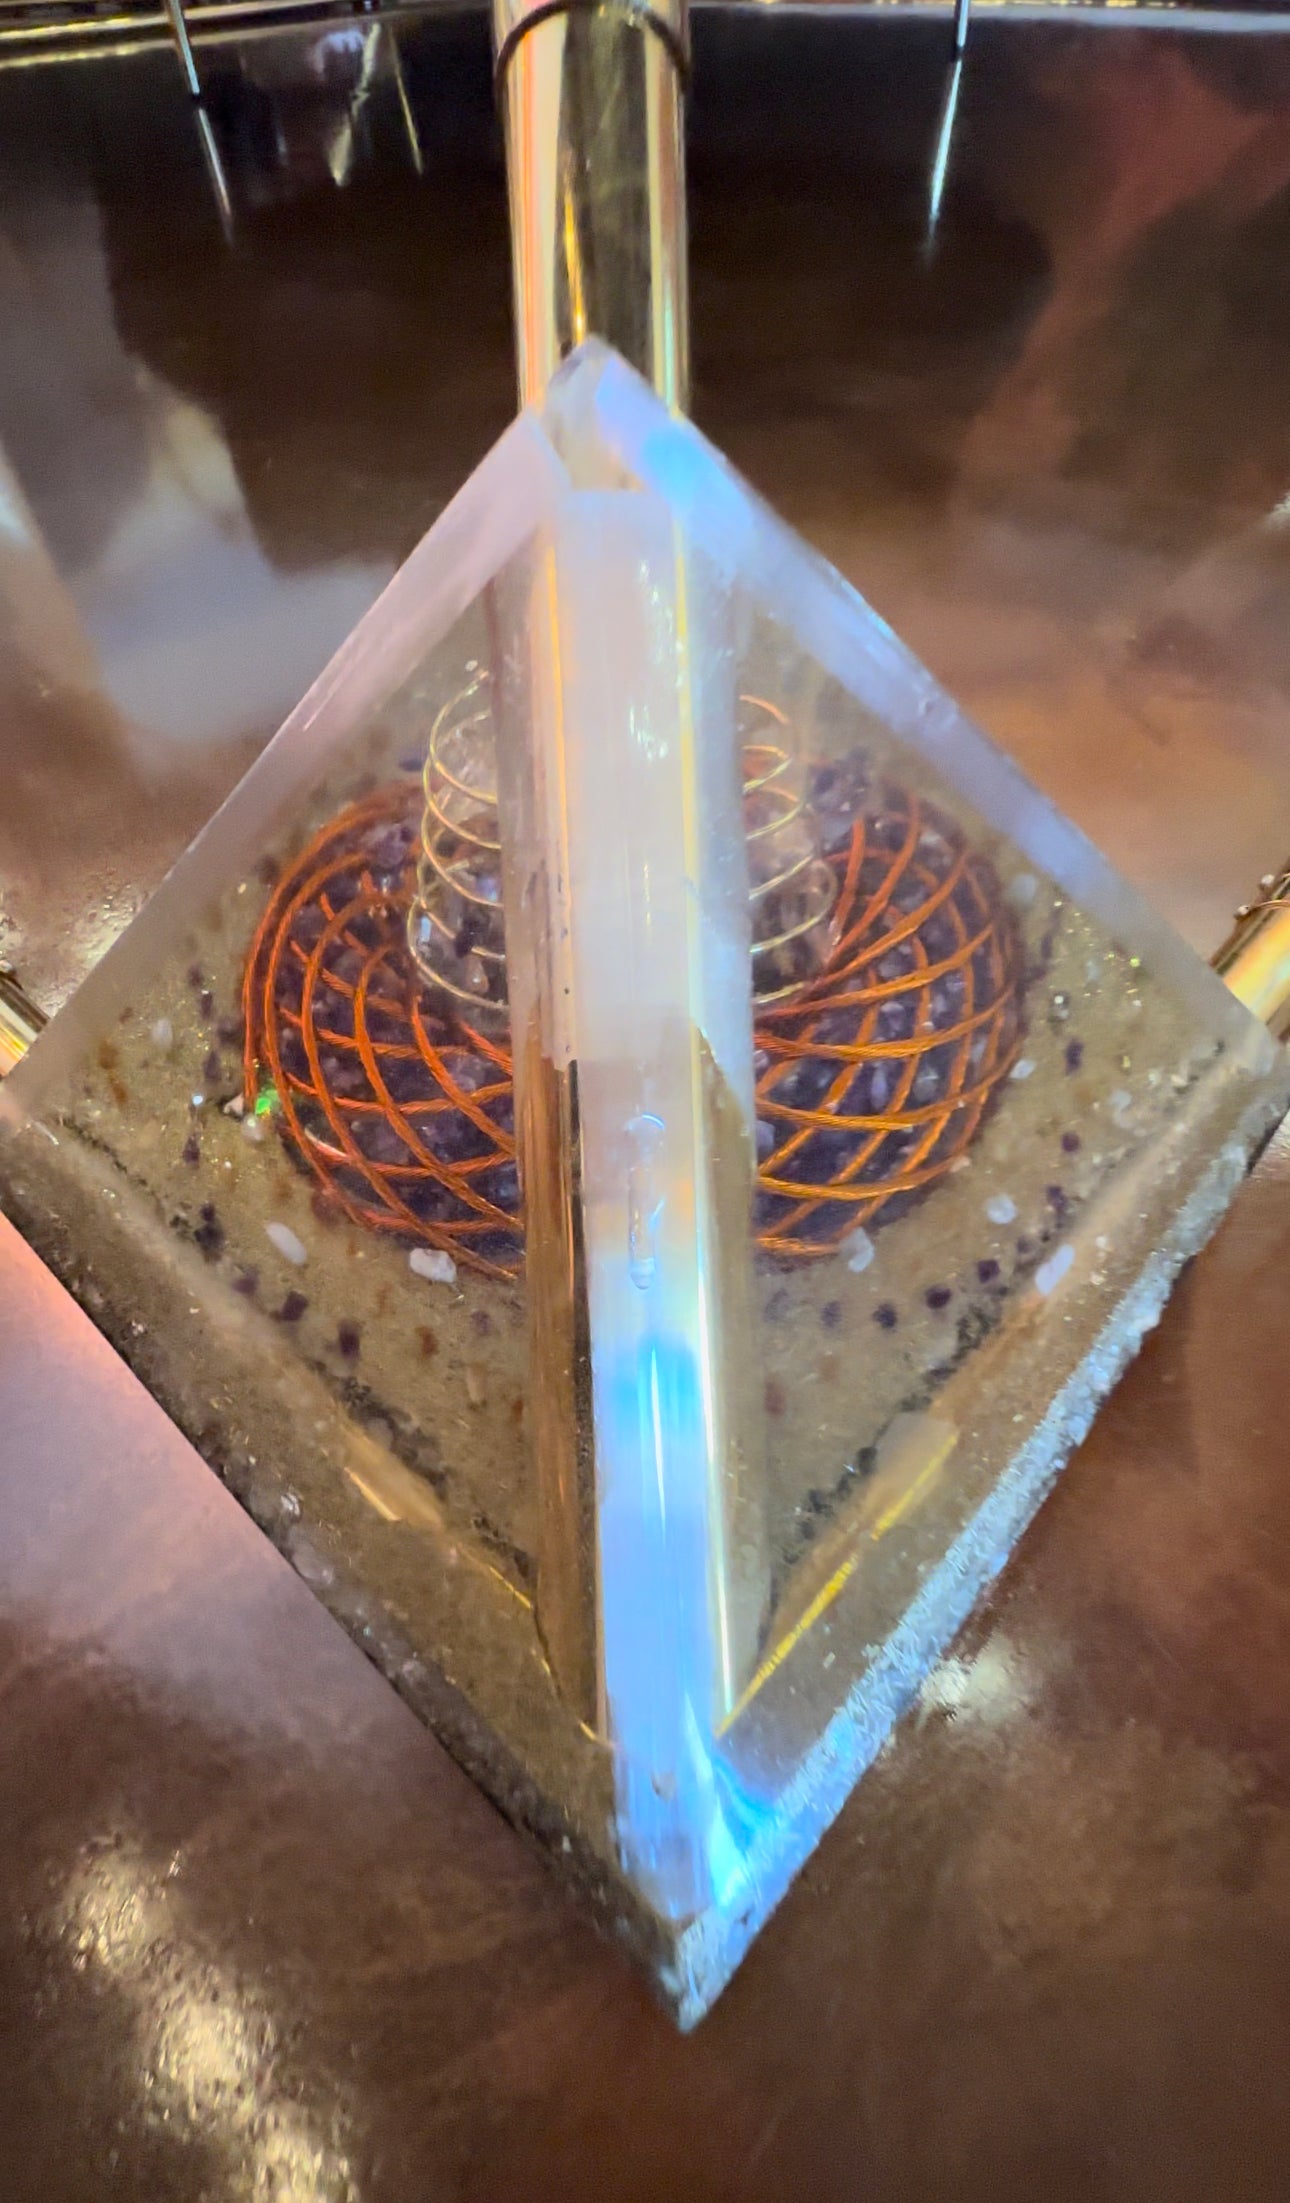 iPyramids i9 GO BIG: Unleashing the Ultimate Tachyon Vortex Field for Quantum Healing & Superior 5G Protection